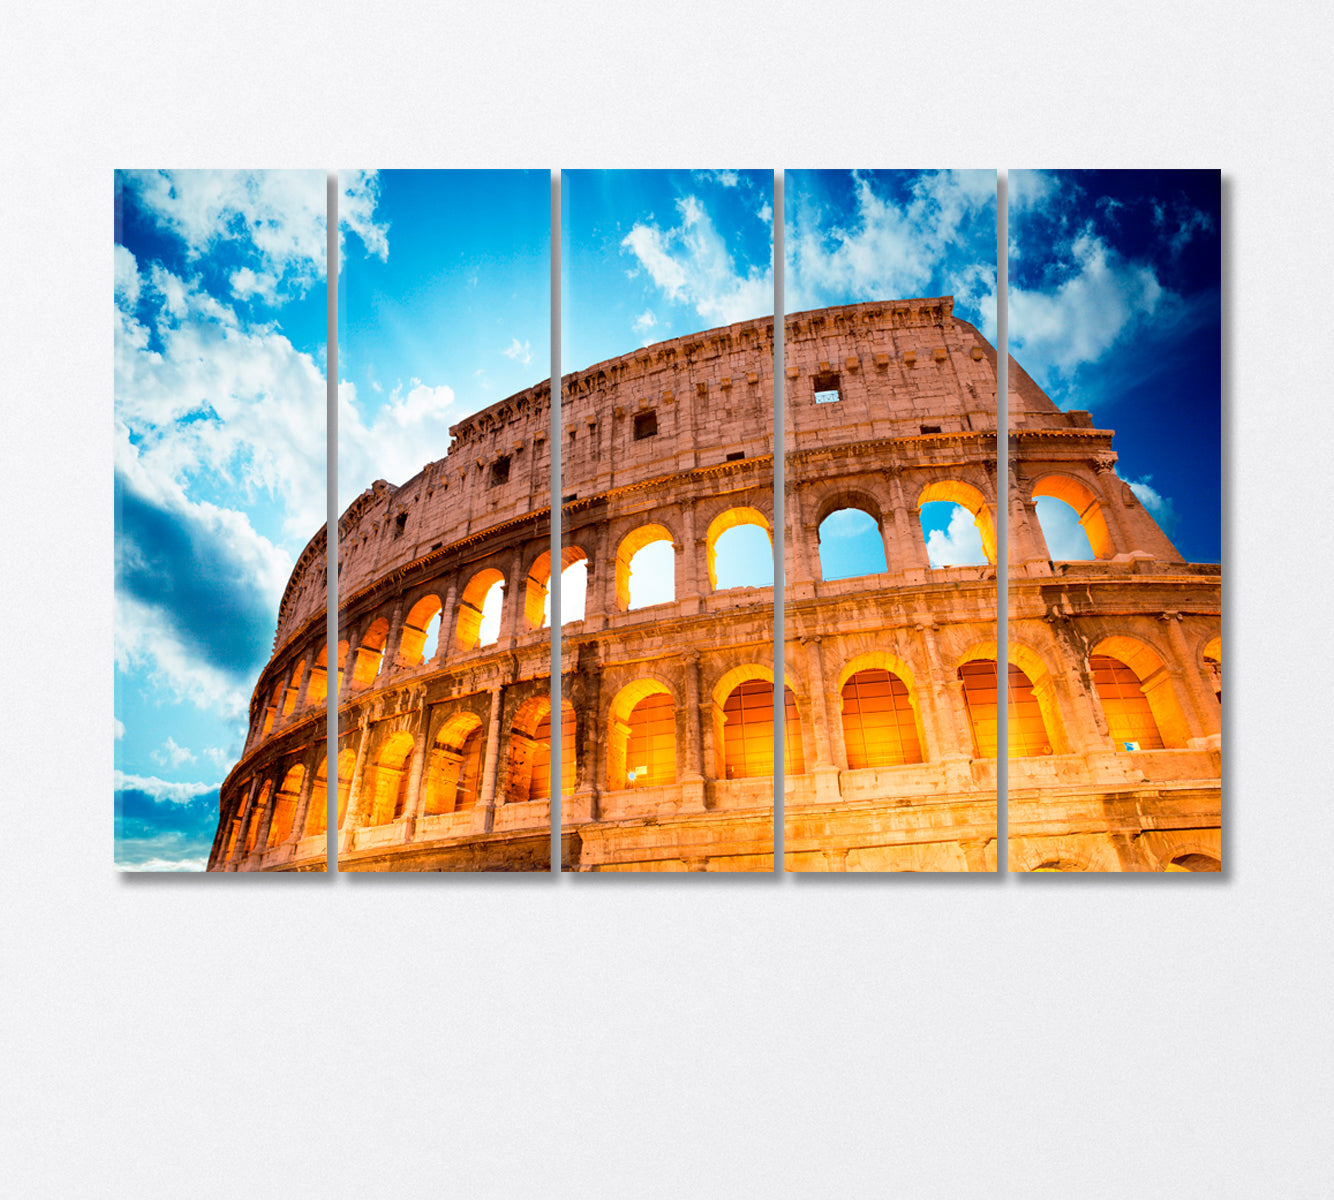 Colosseum Rome Italy Canvas Print-Canvas Print-CetArt-5 Panels-36x24 inches-CetArt